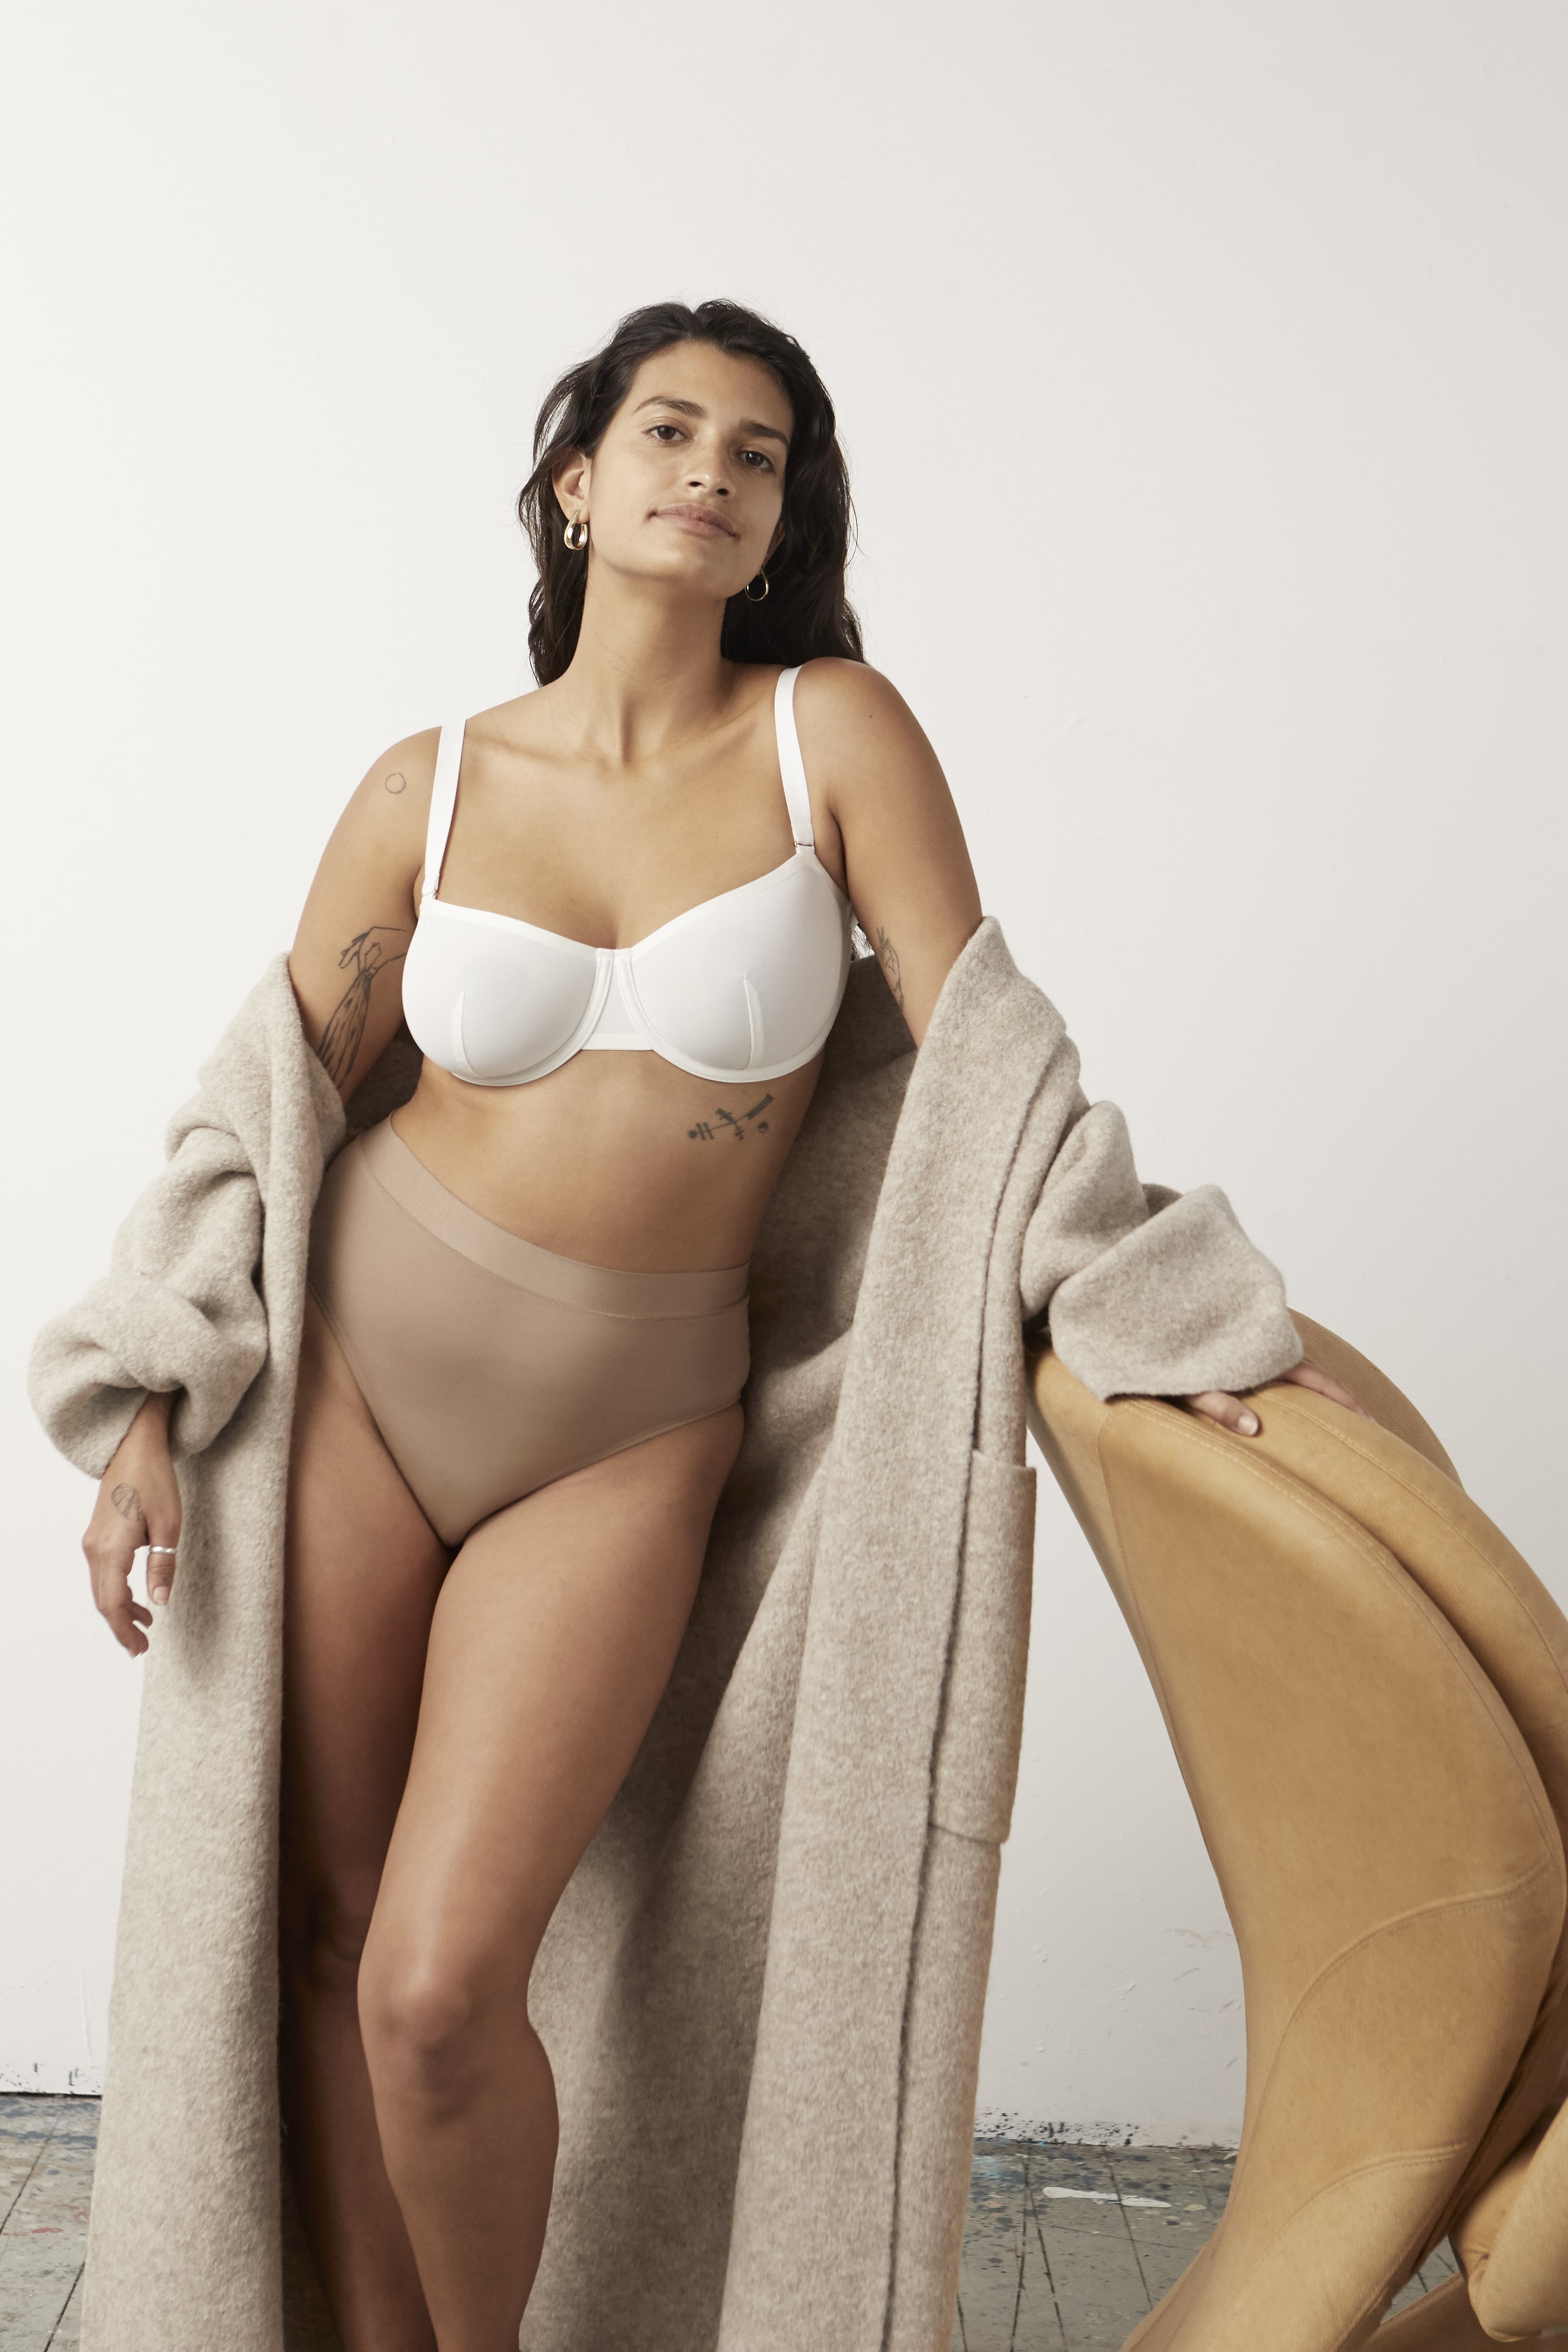 Buy Alexa Beauty Net Lingerie Set, Comfort Bra Panty Set for Women